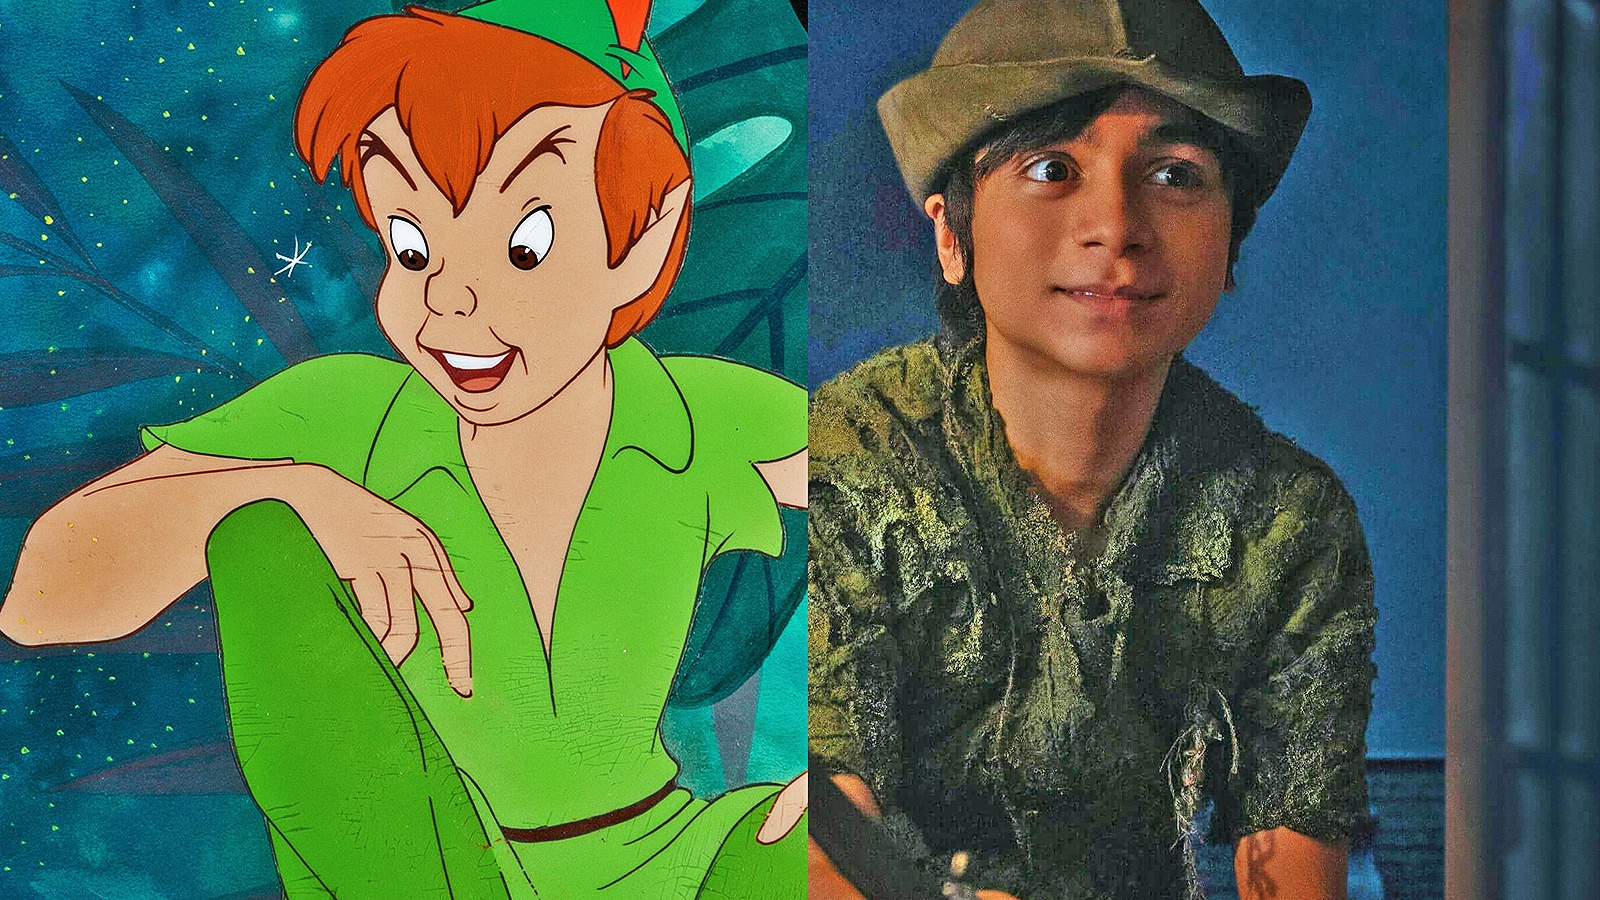 Le avventure di Peter Pan vs Peter Pan & Wendy: analogie e differenze